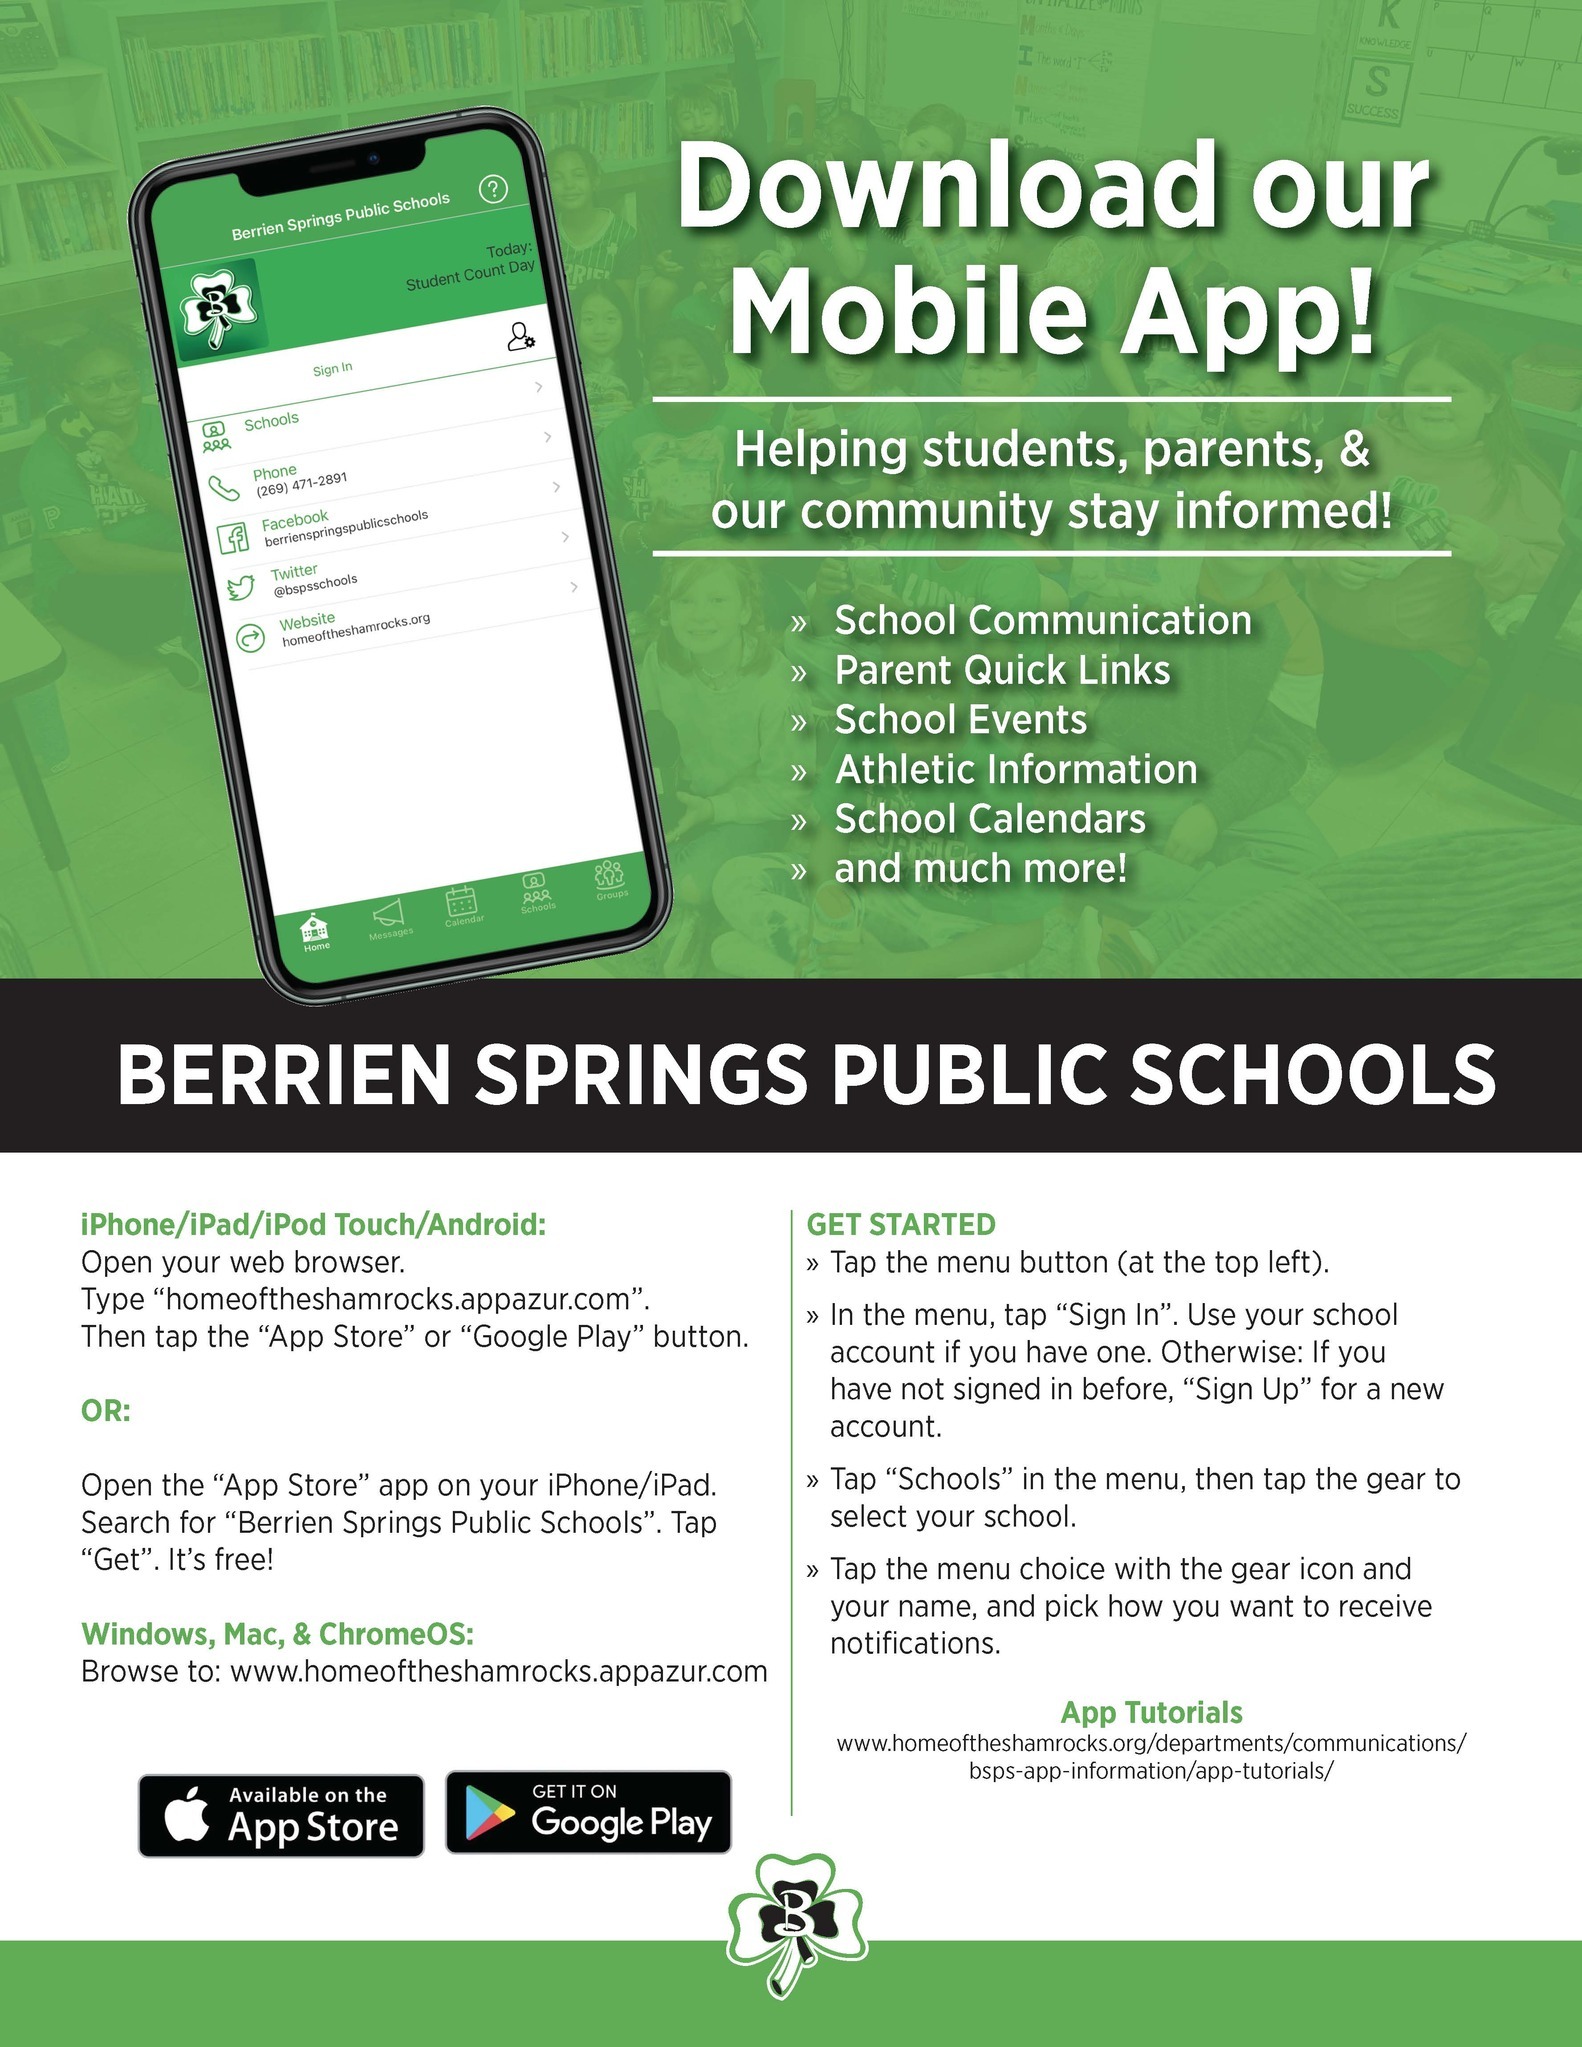 Download the Mobile App Flyer